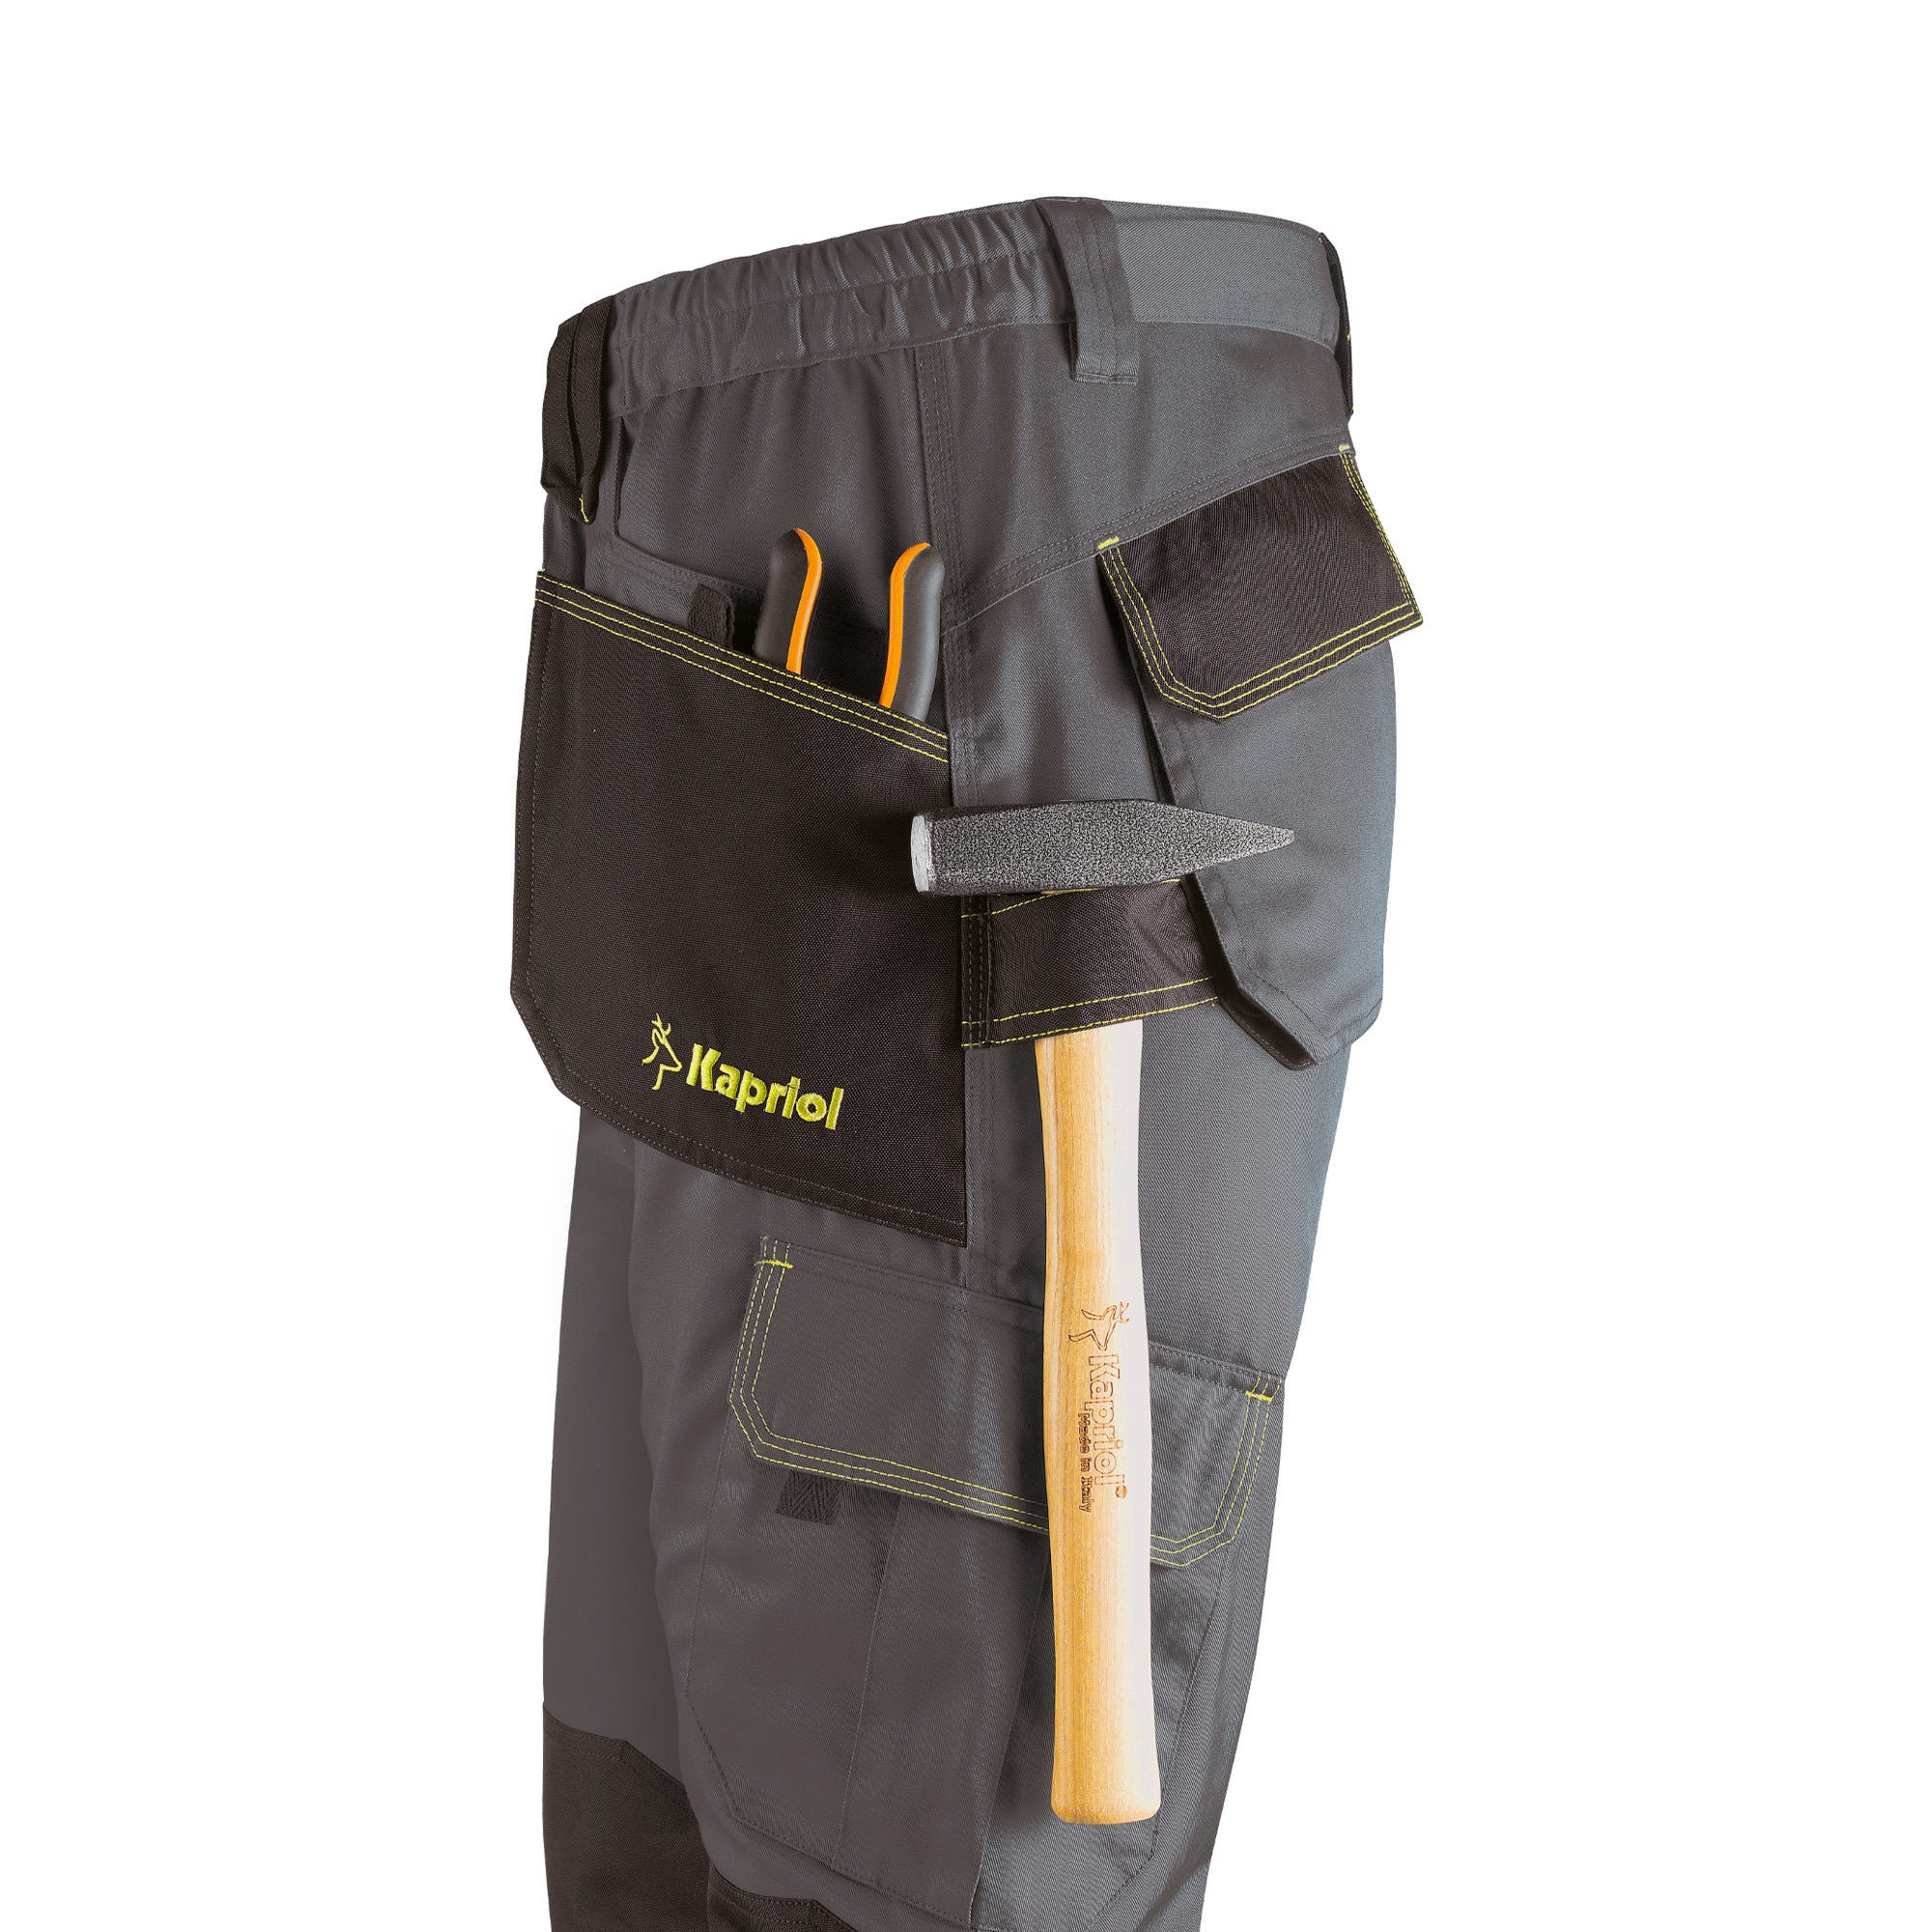 Pantalon de travail gris/noir T.XXXL SPOT - KAPRIOL 2